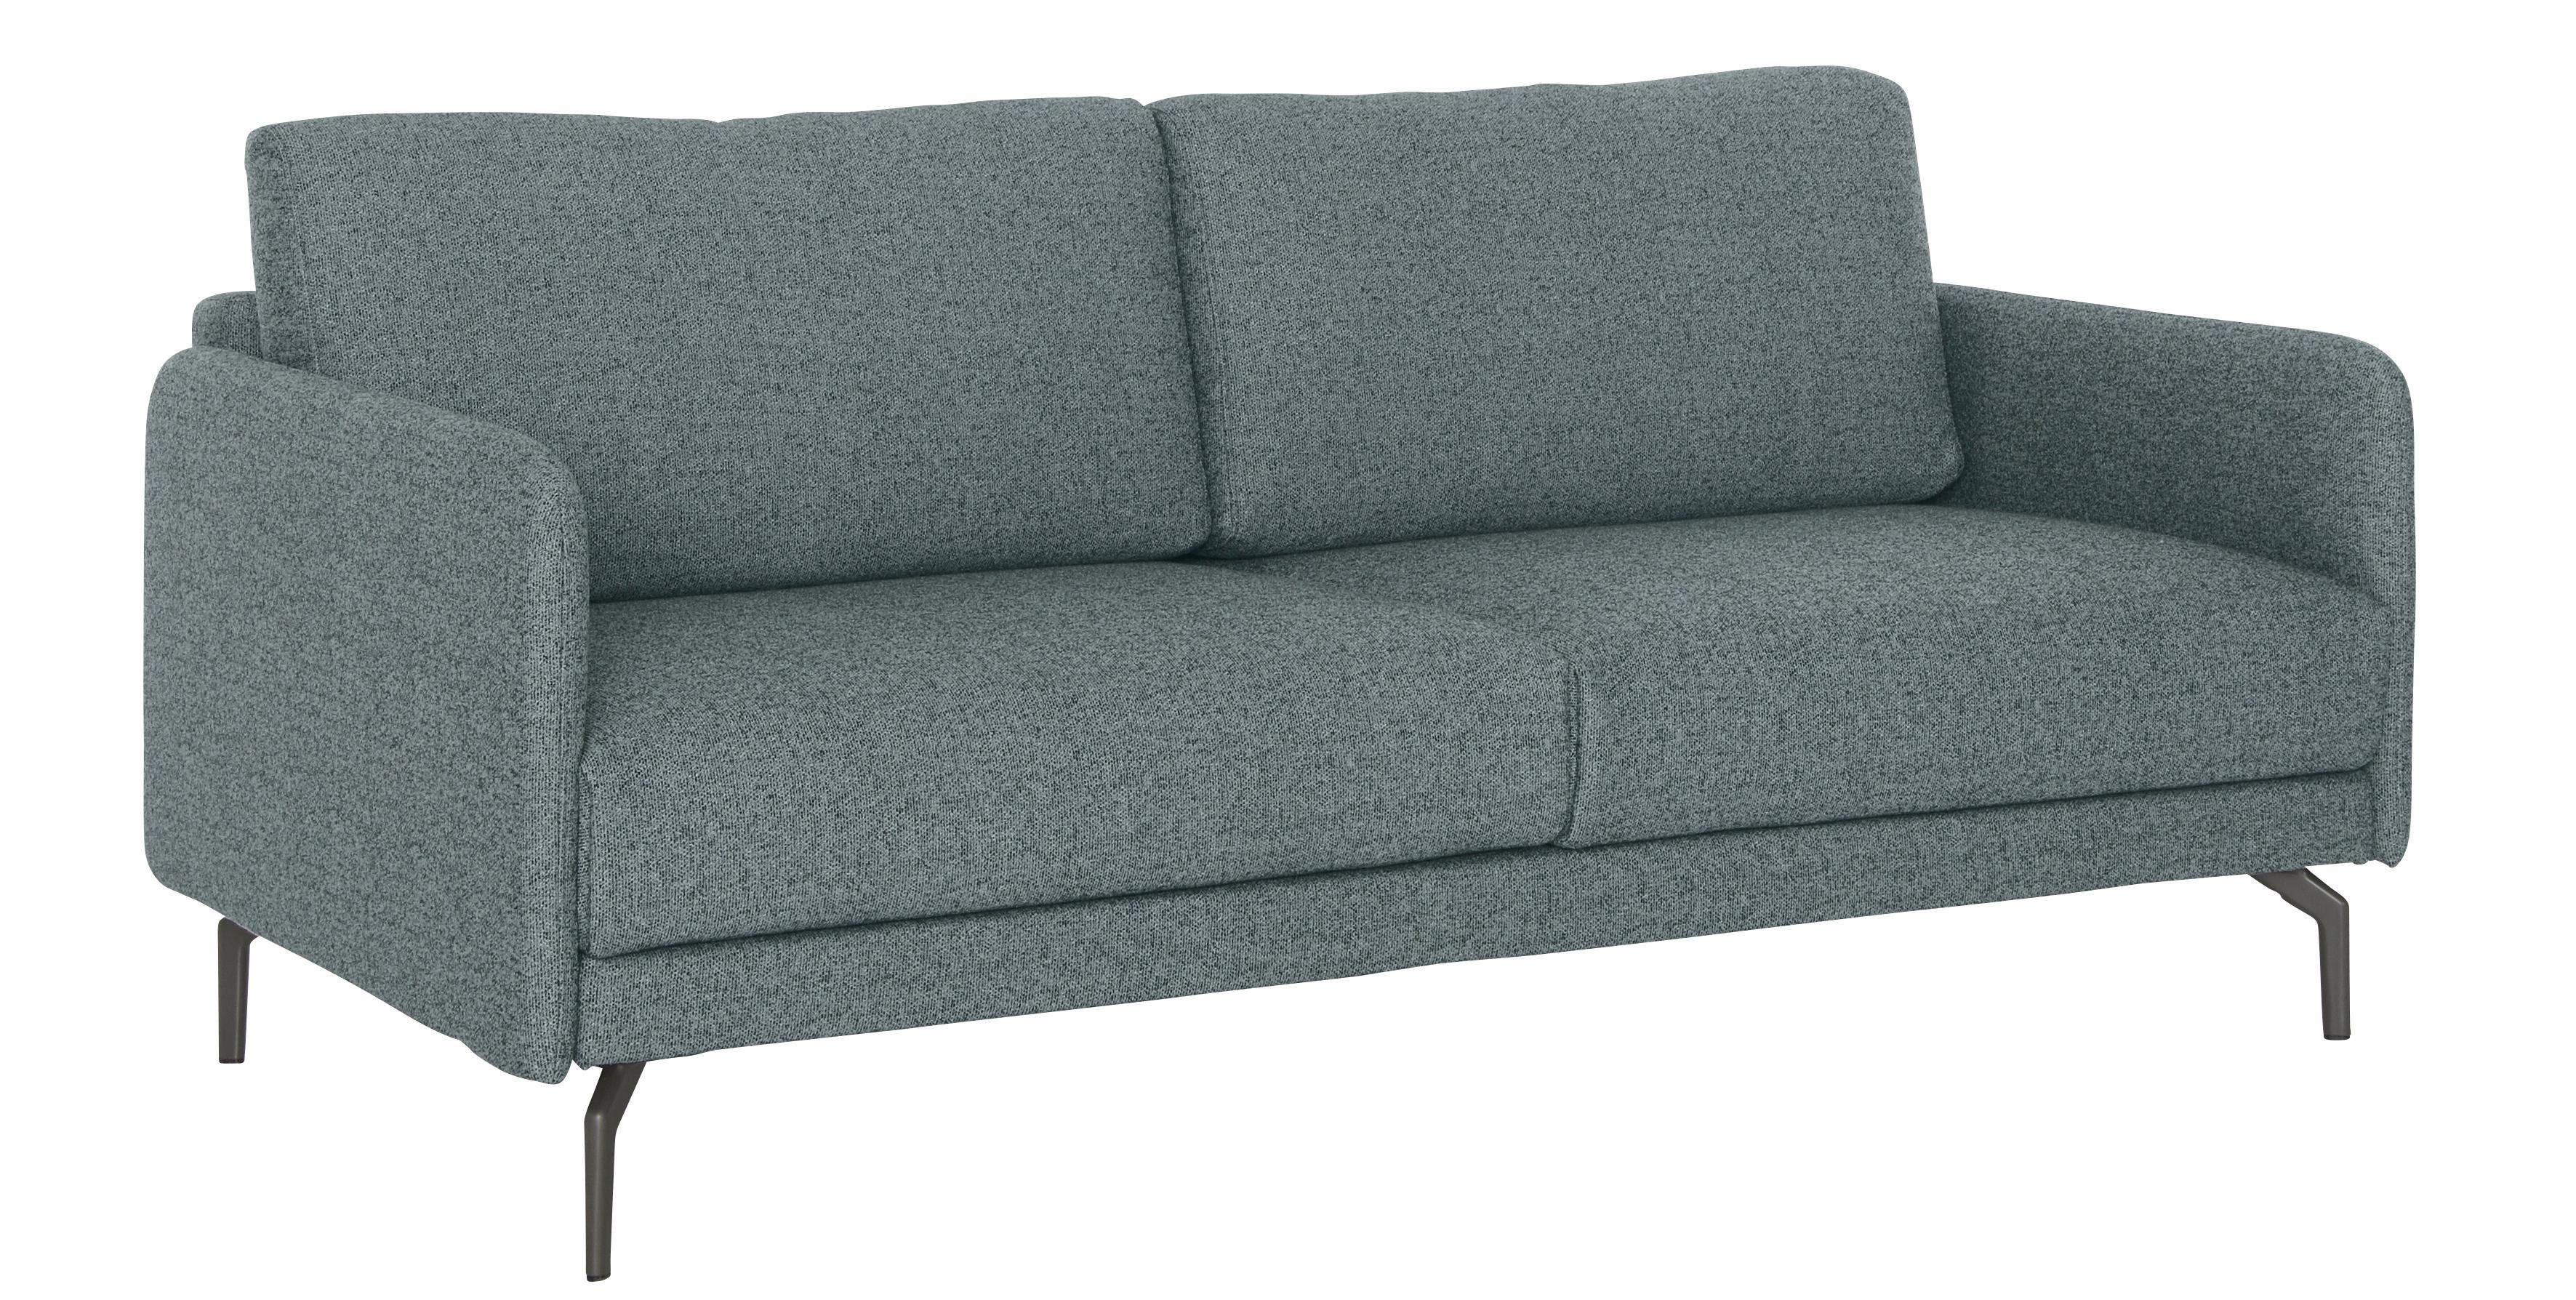 hülsta sofa 3-Sitzer hs.450, Armlehne cm, Umbragrau sehr schmal, 190 Alugussfuß Breite